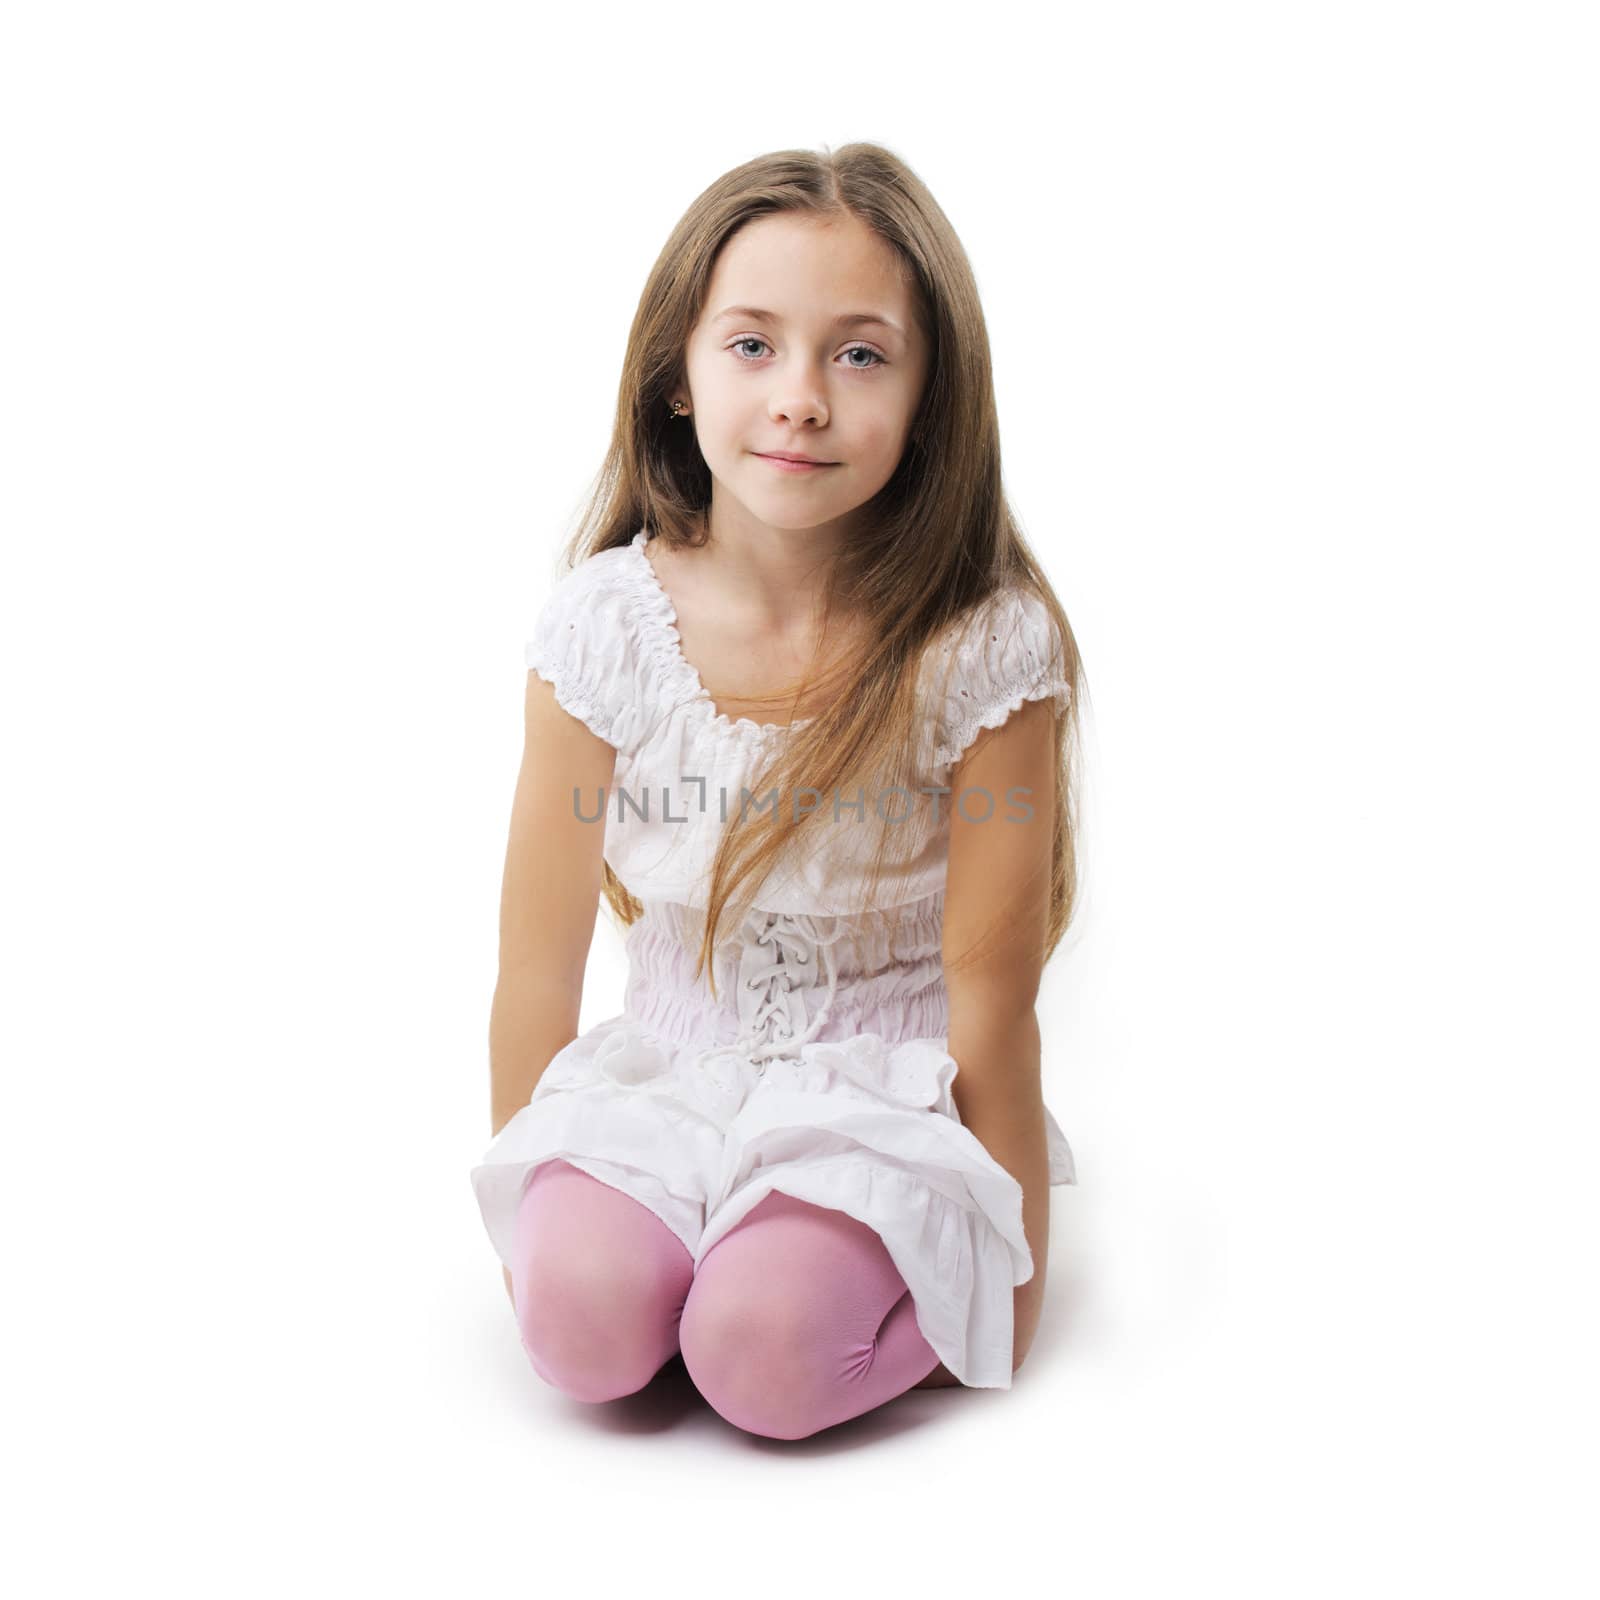 Beautiful little girl portrait on white background